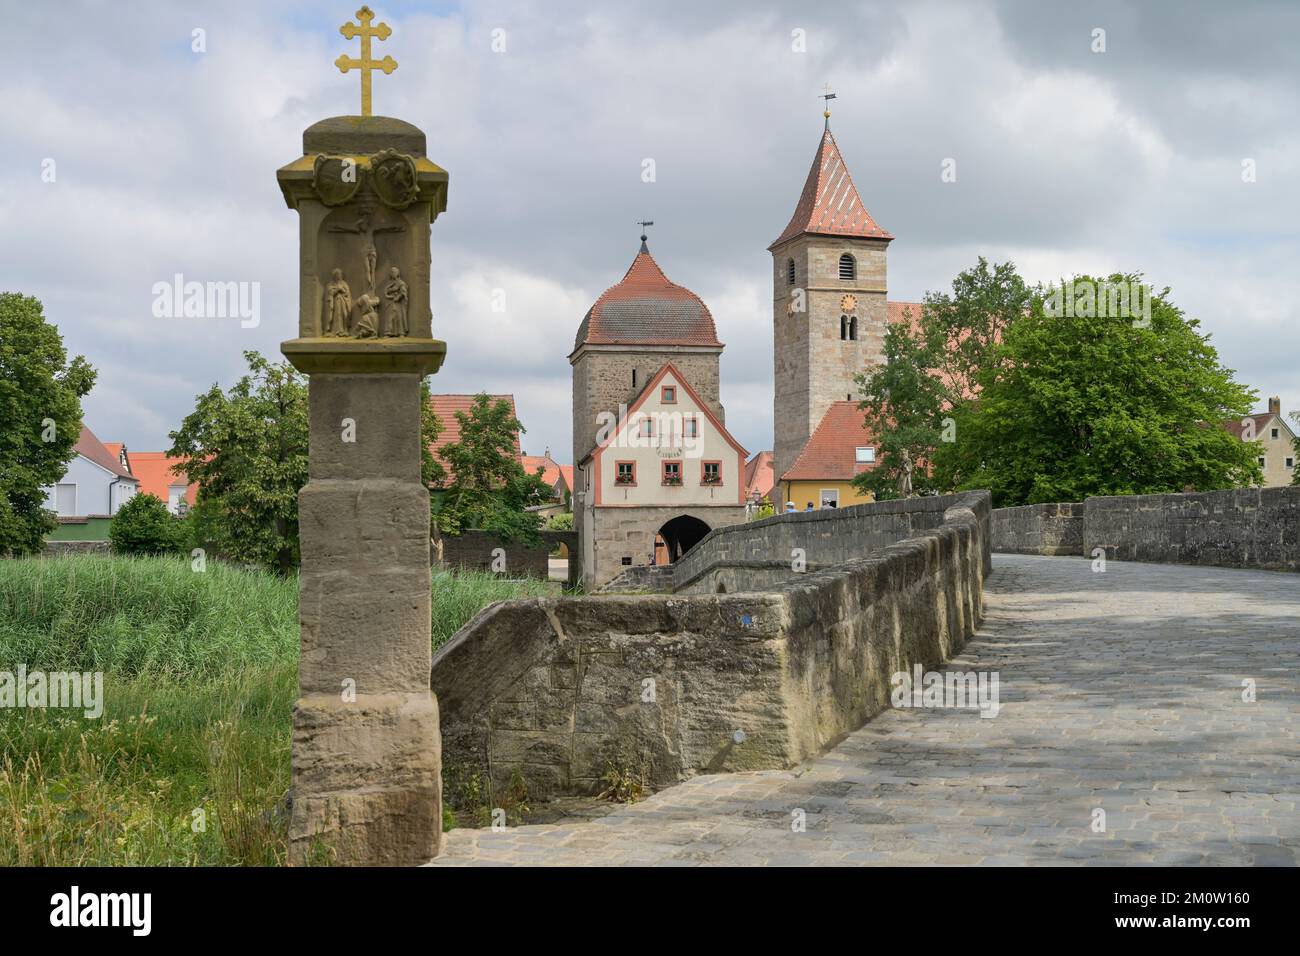 Altmühlbrücke, Unteres Tor, Katholische Pfarrkirche St Jakobus, Ornbau, Bayern, Deutschland Foto Stock